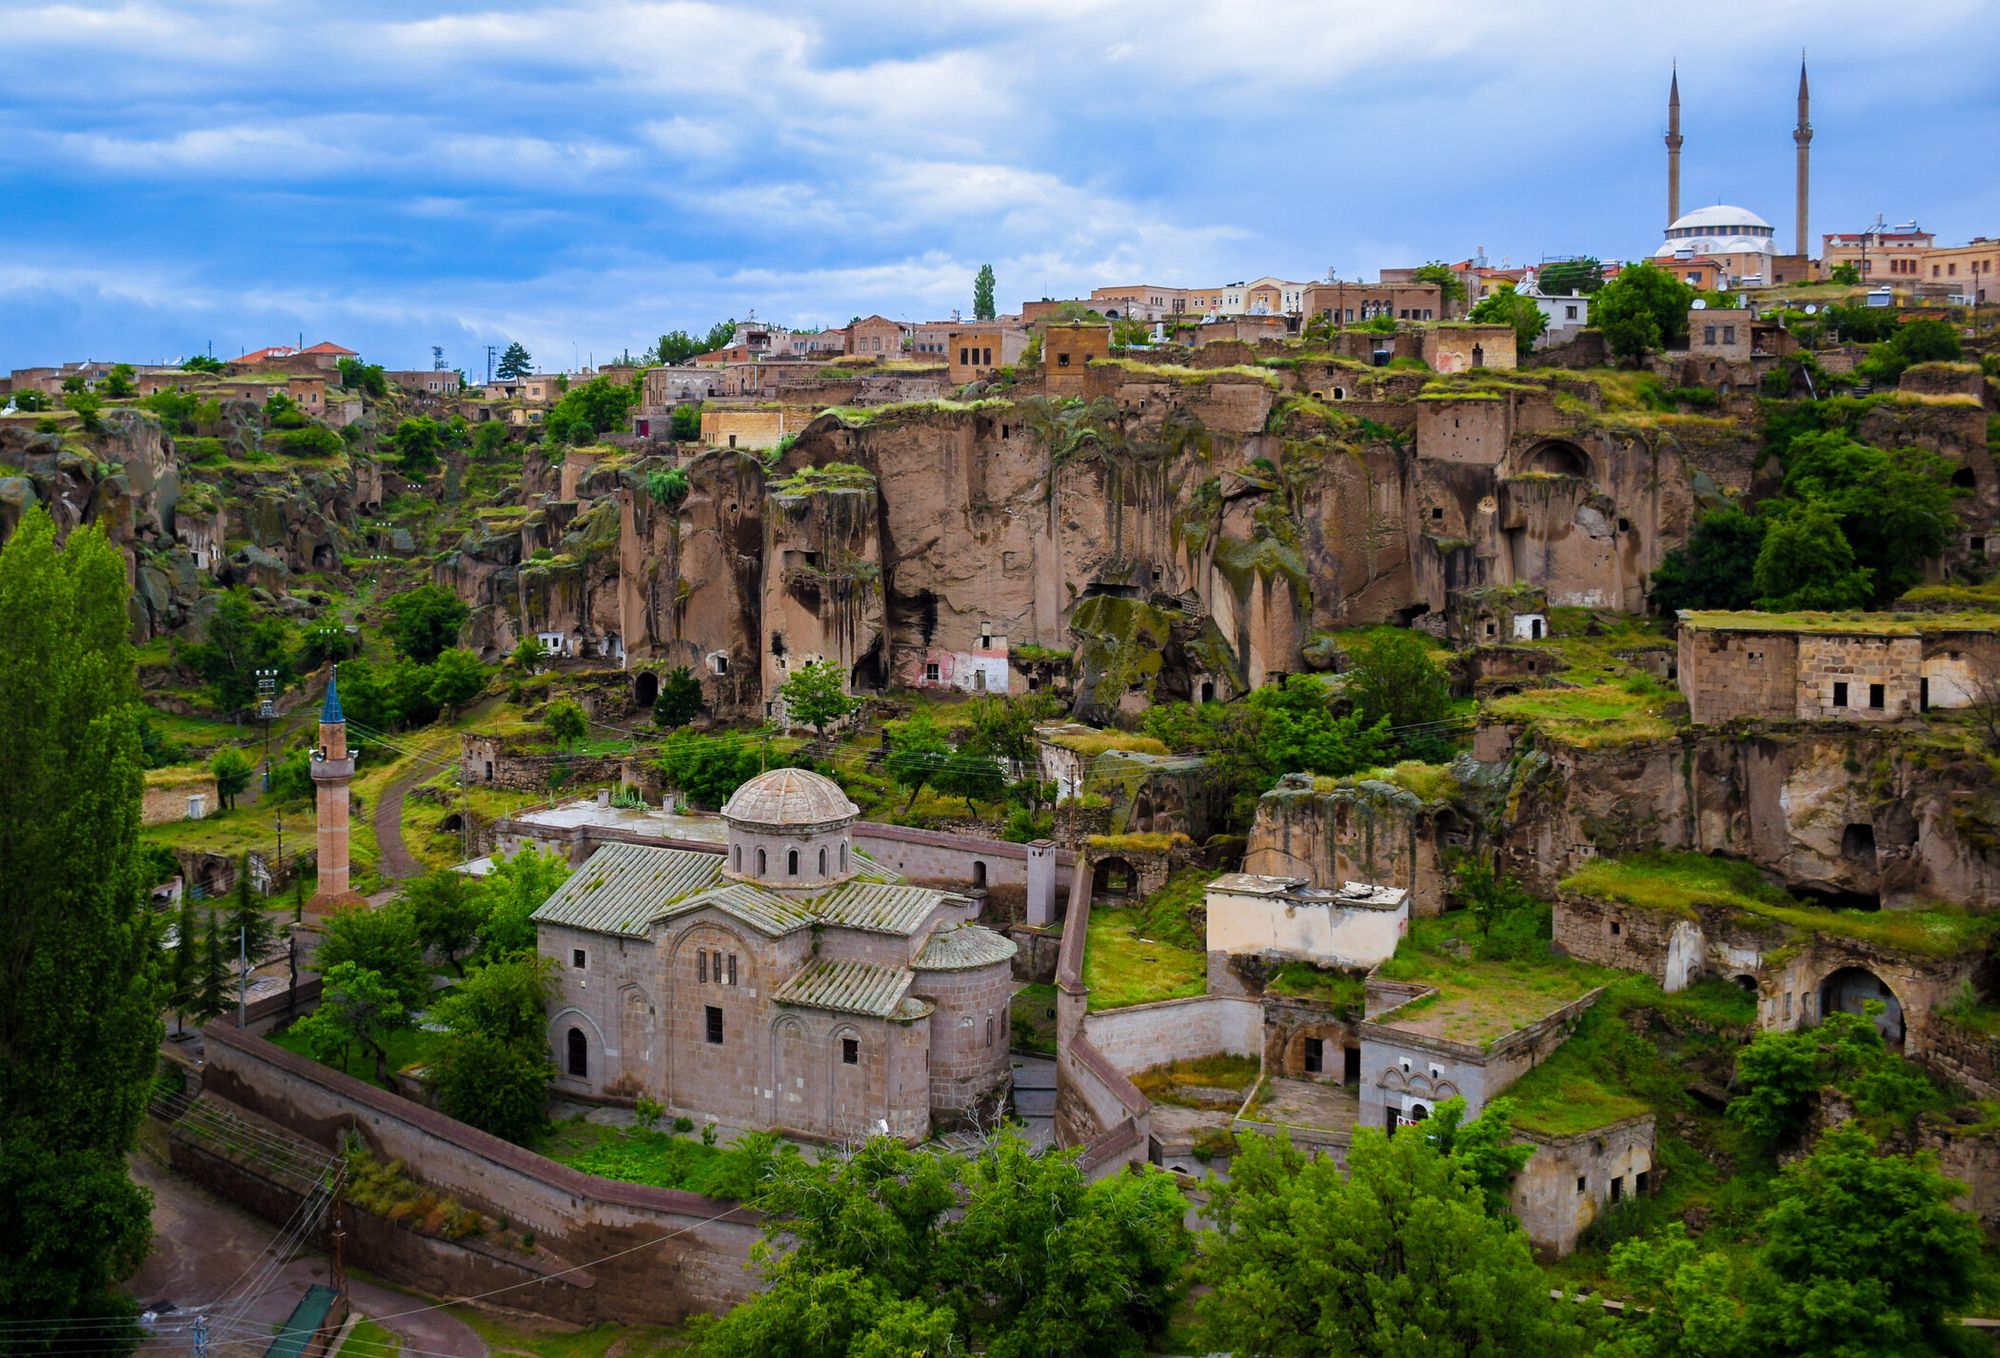 Church of St. Gregorius in Guzelyurt, Cappadocia Turkey — Getty Images